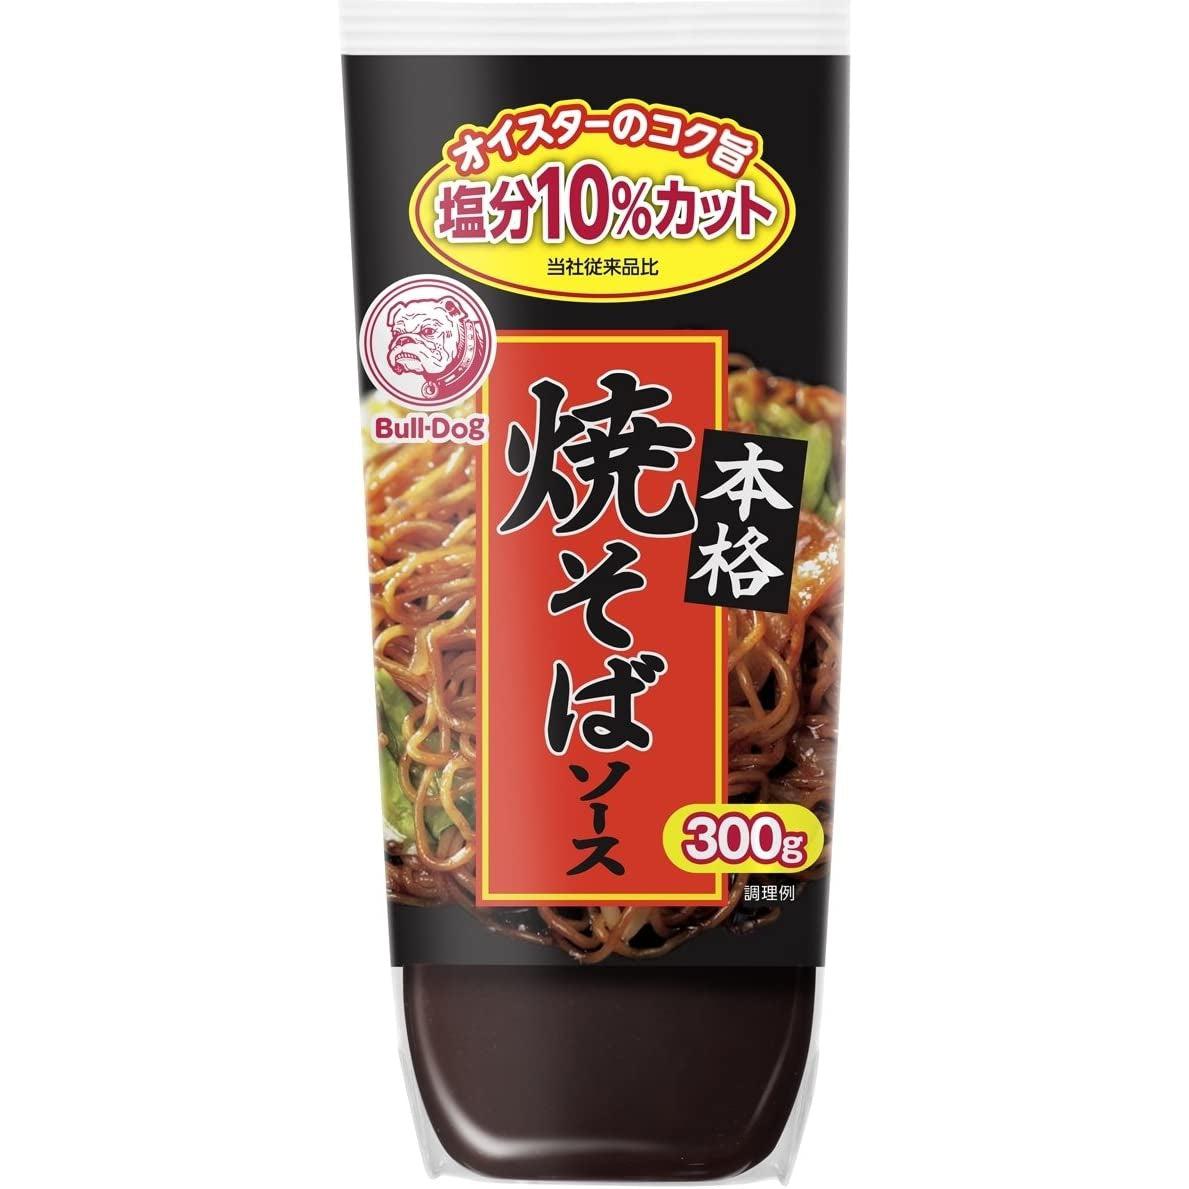 Bull-Dog Japanese Yakisoba Sauce 300g - YOYO JAPAN